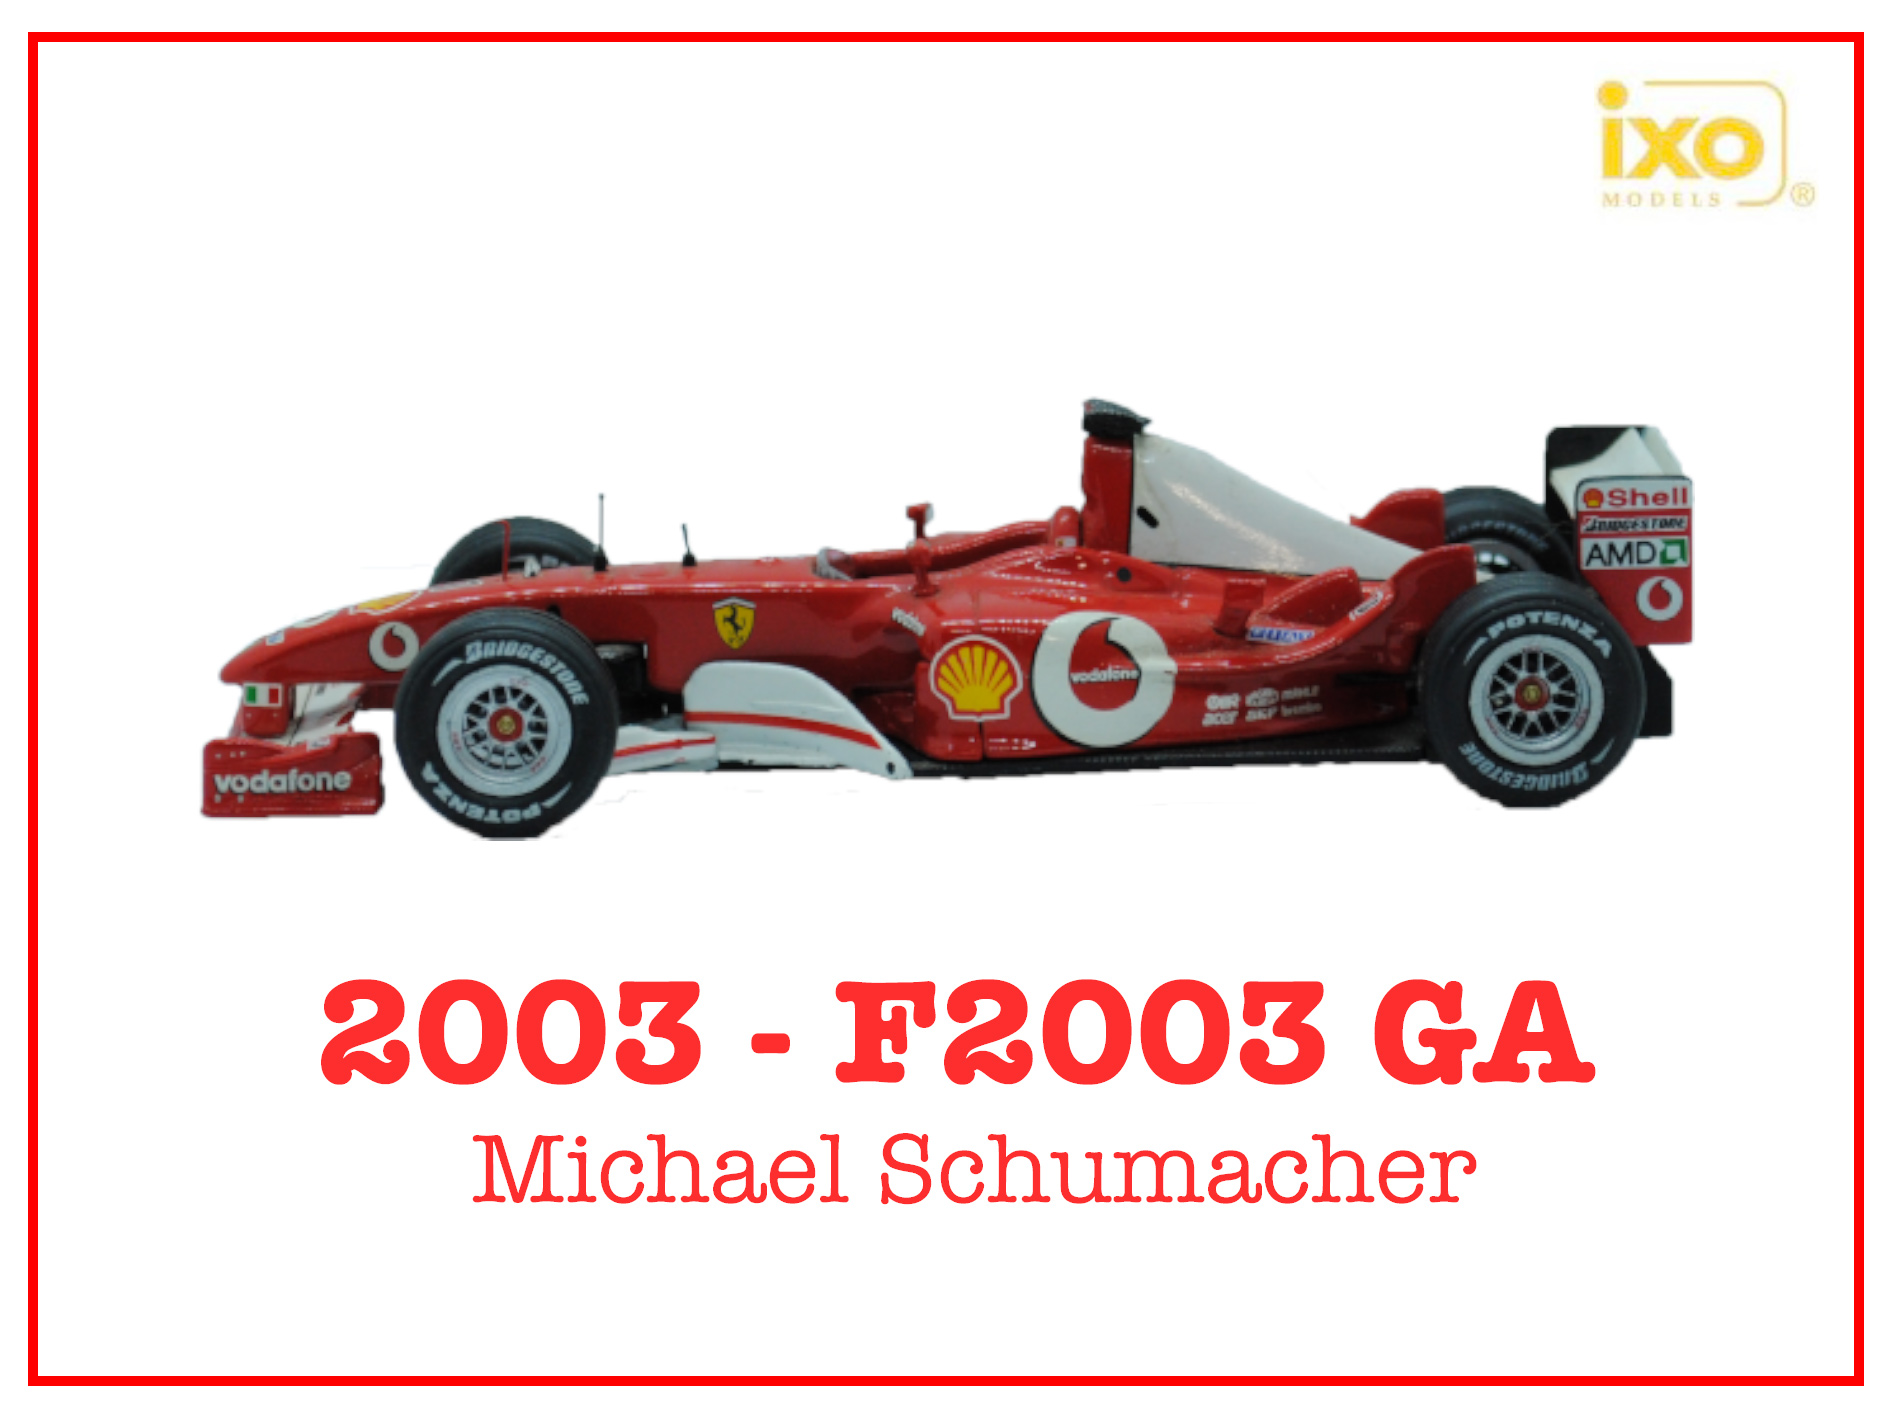 Immagine F2003 GA Michael Schumacher